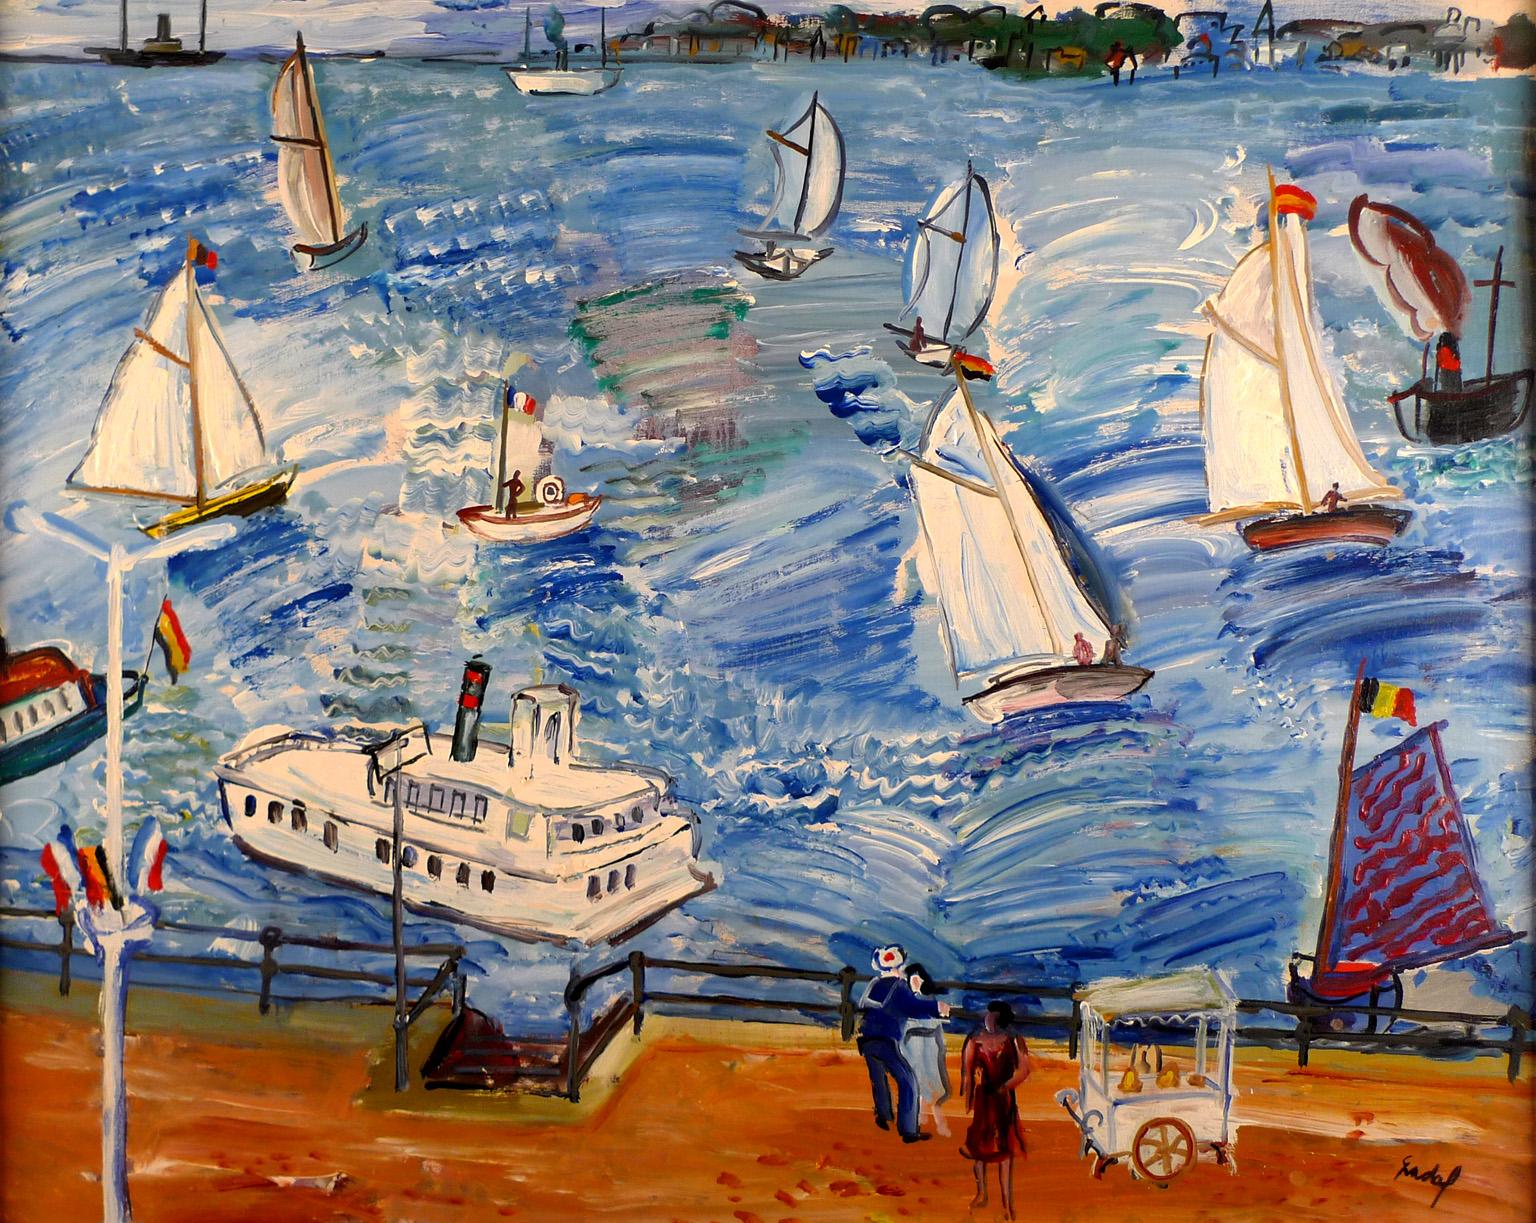 "Fête Nautique", 20th Century oil on canvas by Spanish artist Carlos Nadal